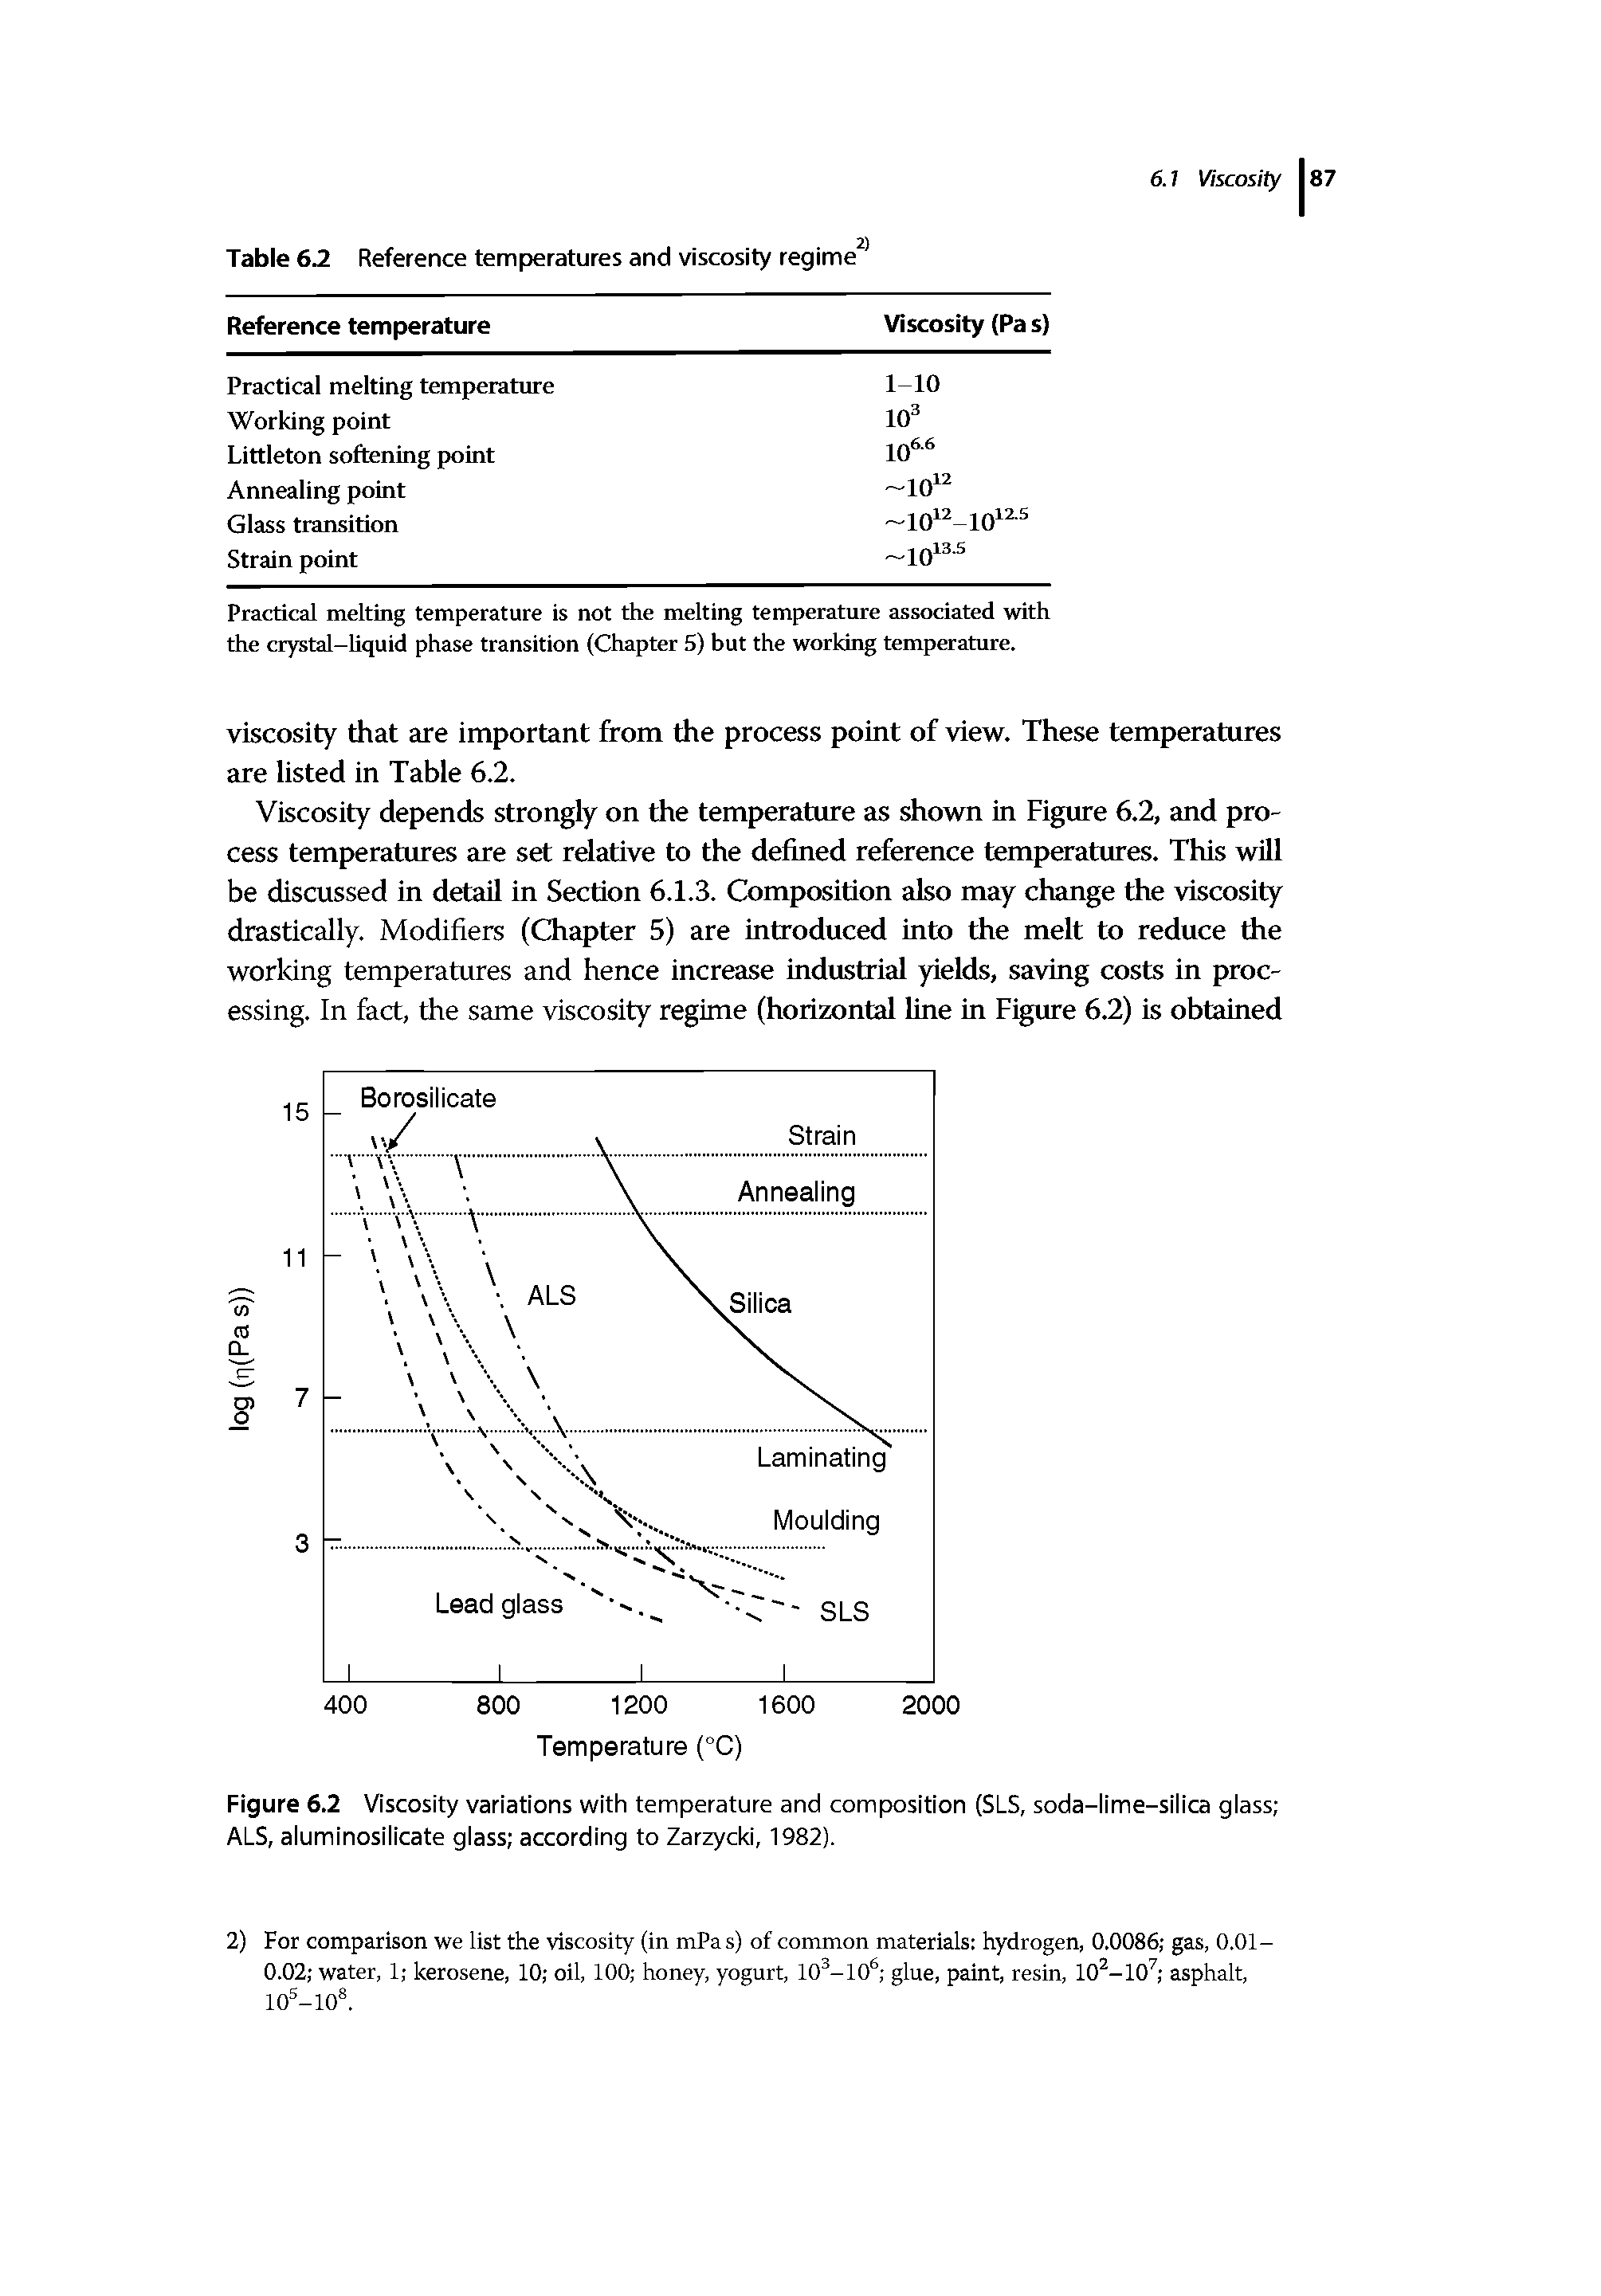 Figure 6.2 Viscosity variations with temperature and composition (SLS, soda-iime-siiica giass ALS, aluminosilicate glass according to Zarzycki, 1982).